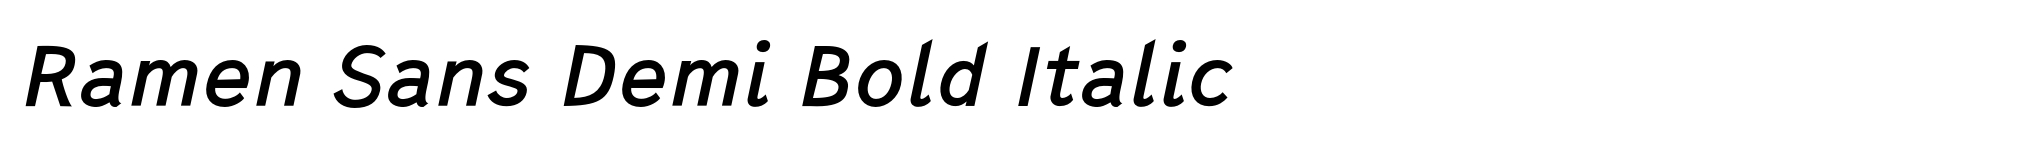 Ramen Sans Demi Bold Italic image